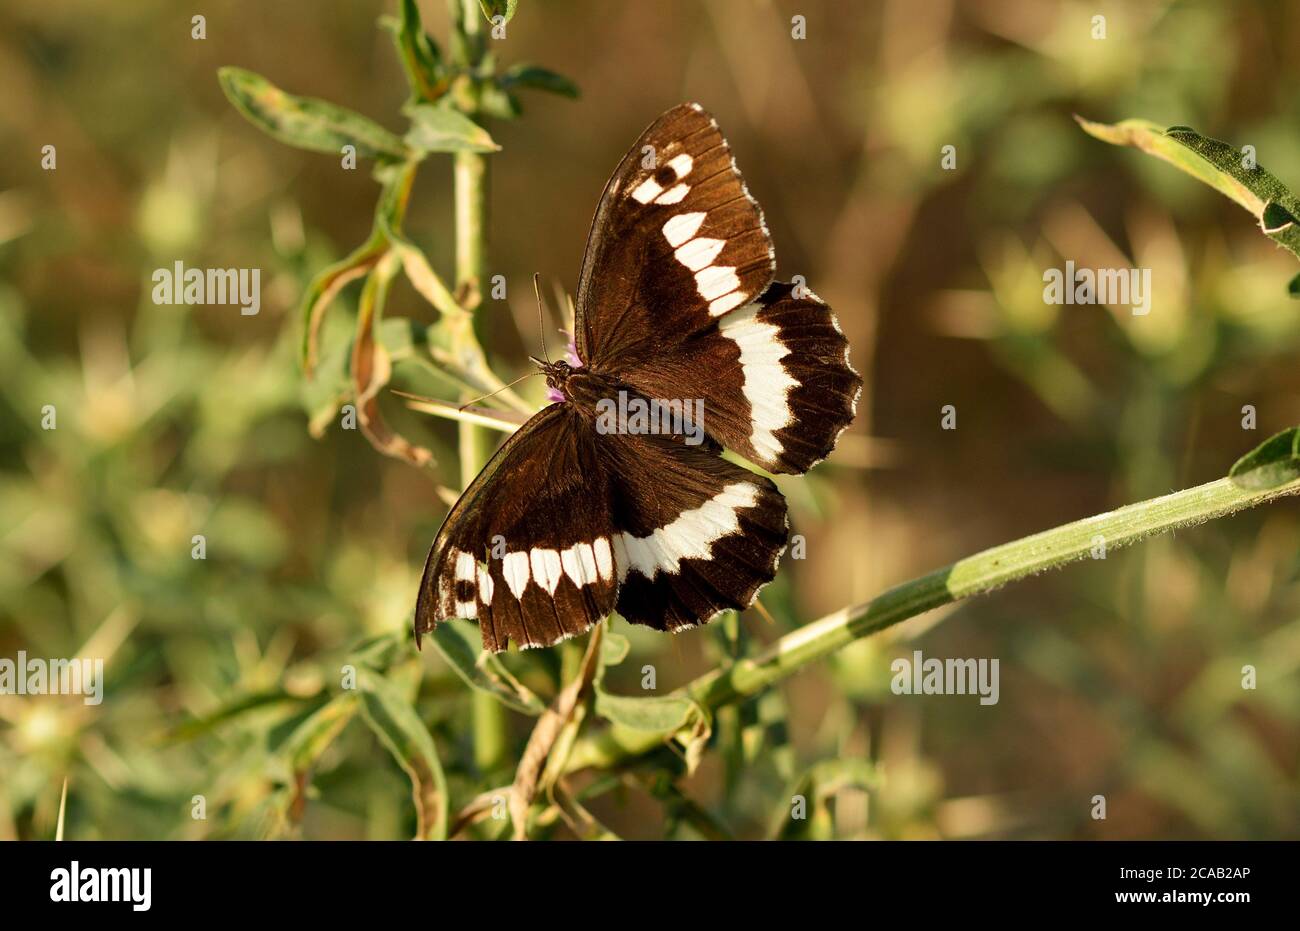 Brintesia circe butterfly Stock Photo